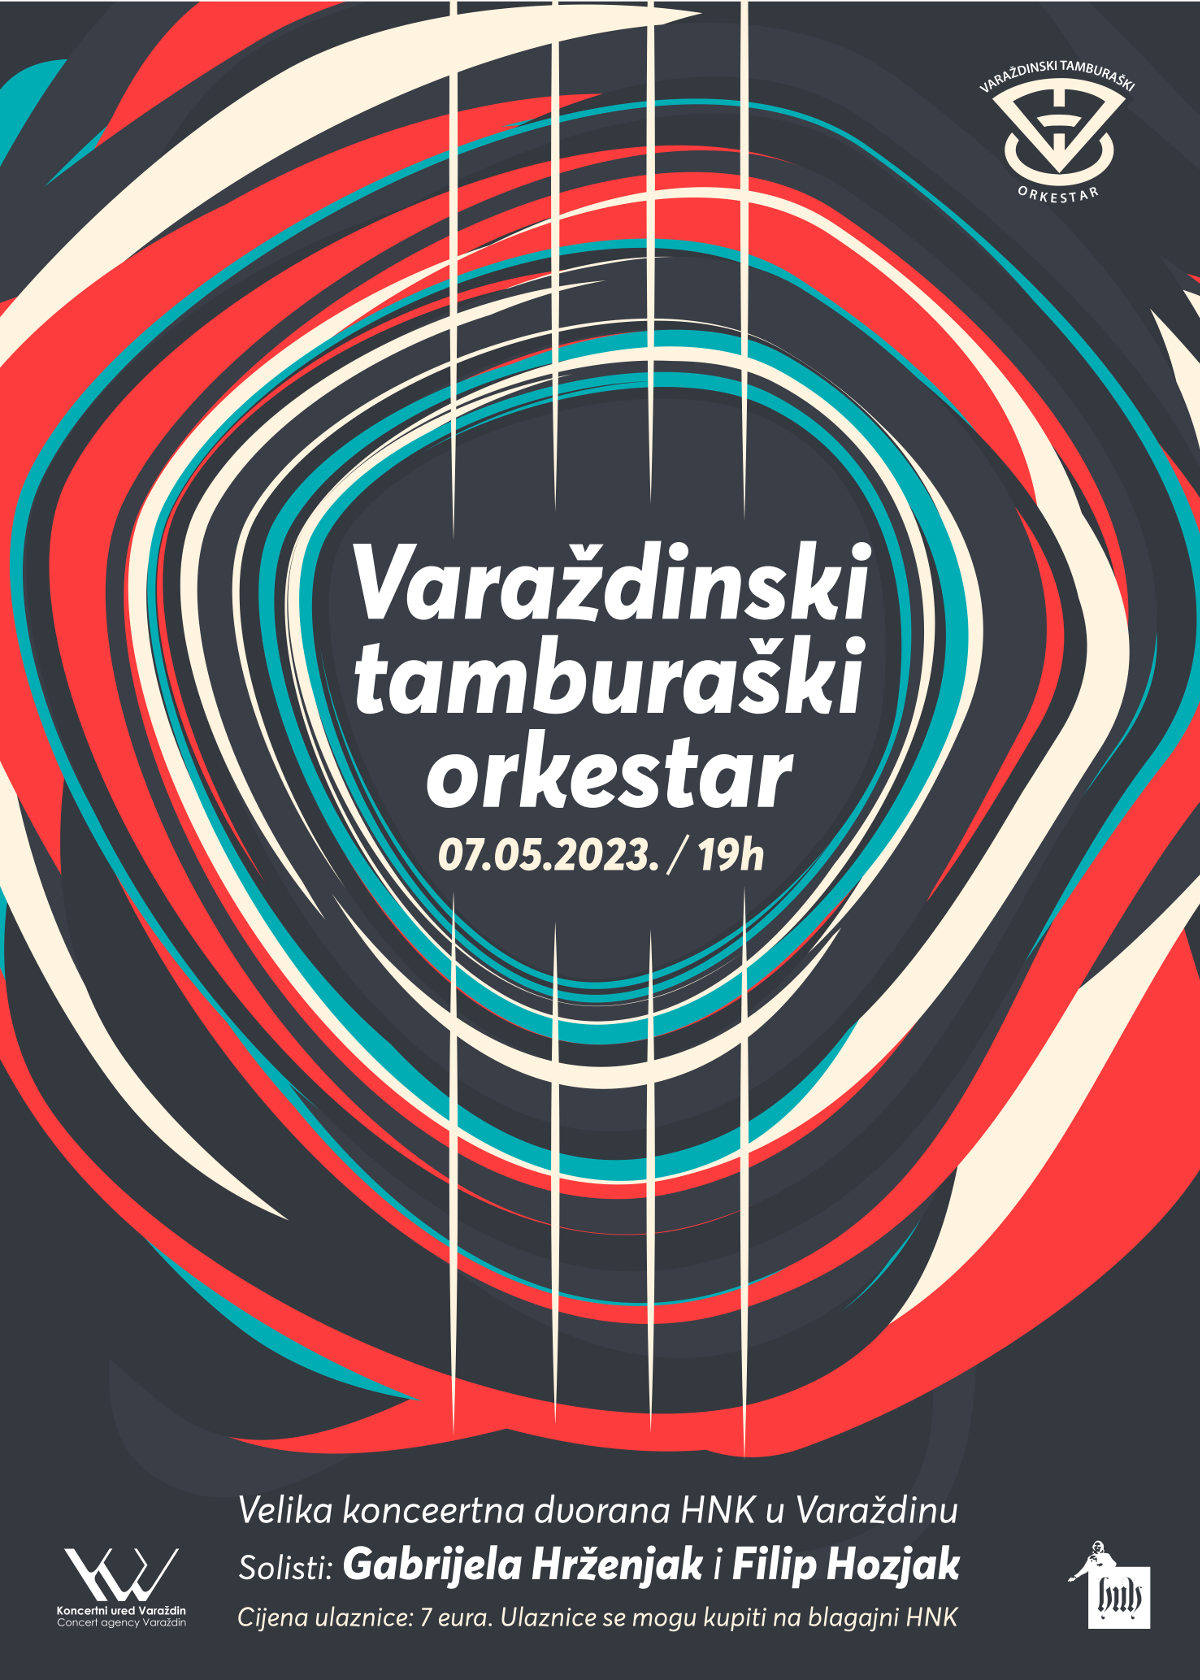 Varazdinski_tamburaski_orkestar_najava_koncerta_06053023.jpg